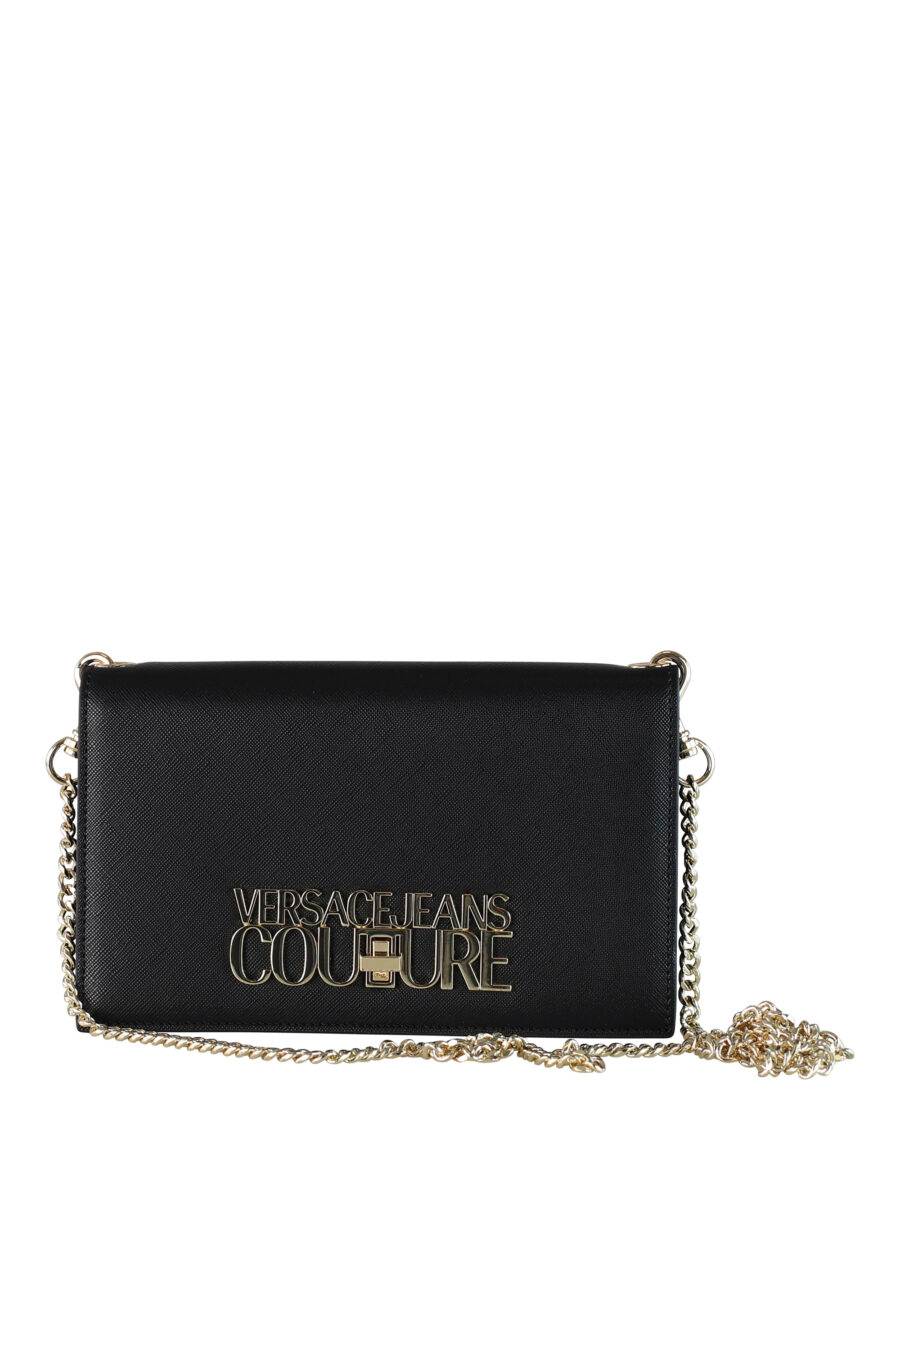 Black shoulder bag with chain and golden logo - IMG 0476